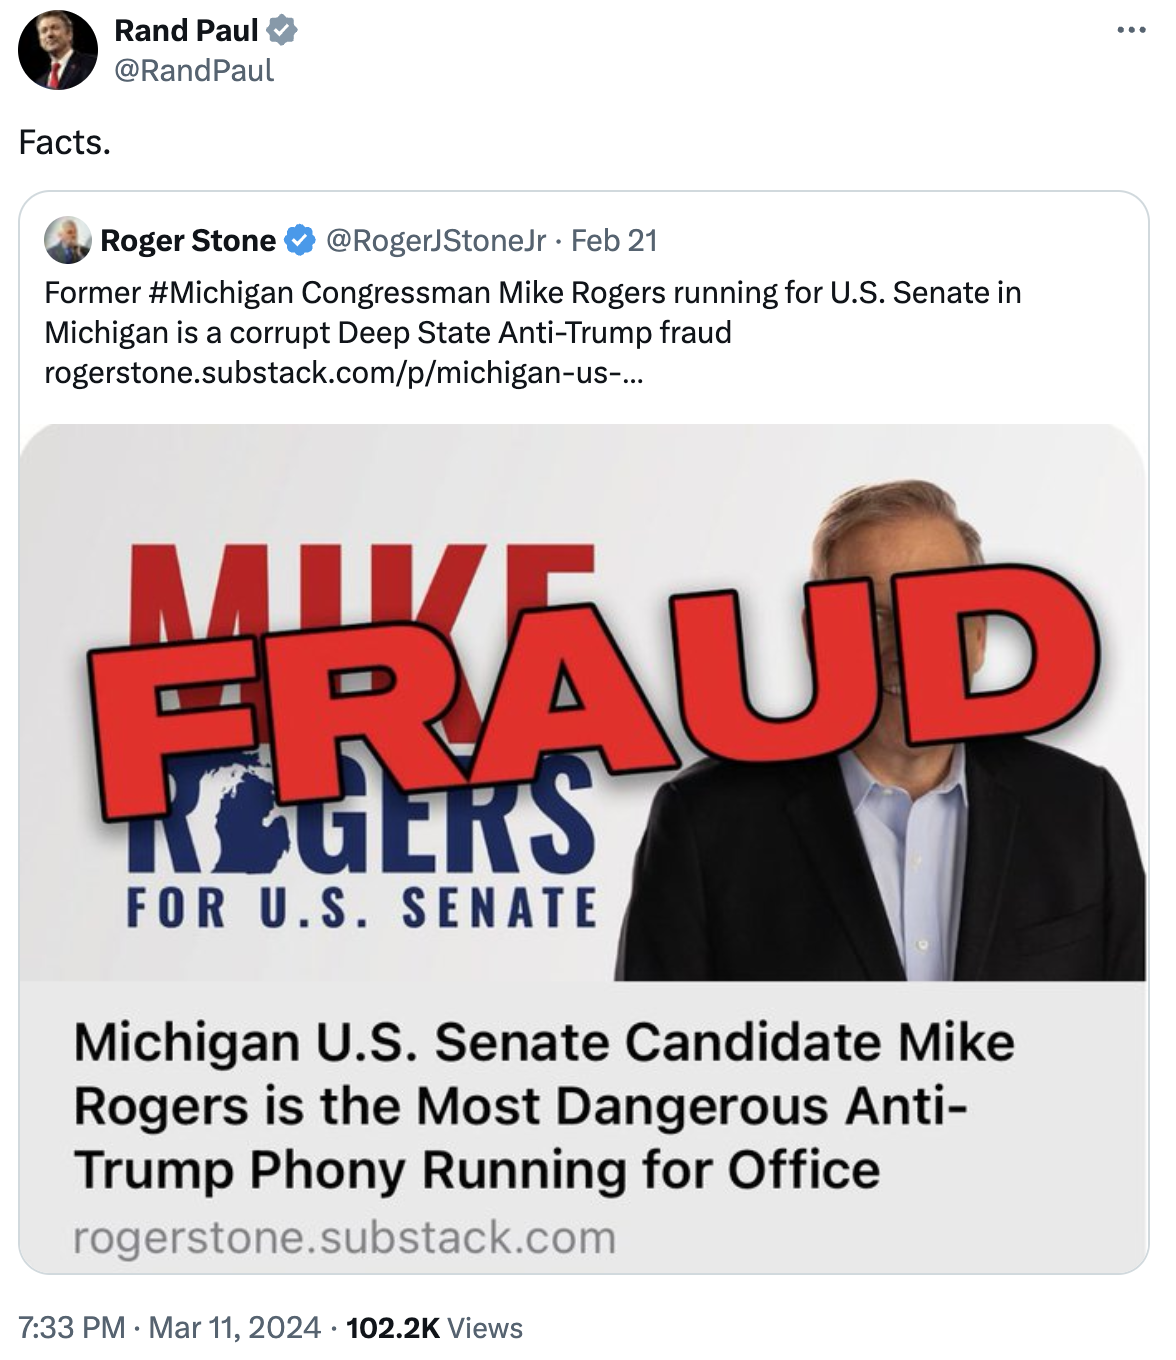 Rand Paul retweet of Roger Stone tweet attacking Mike Rogers. 